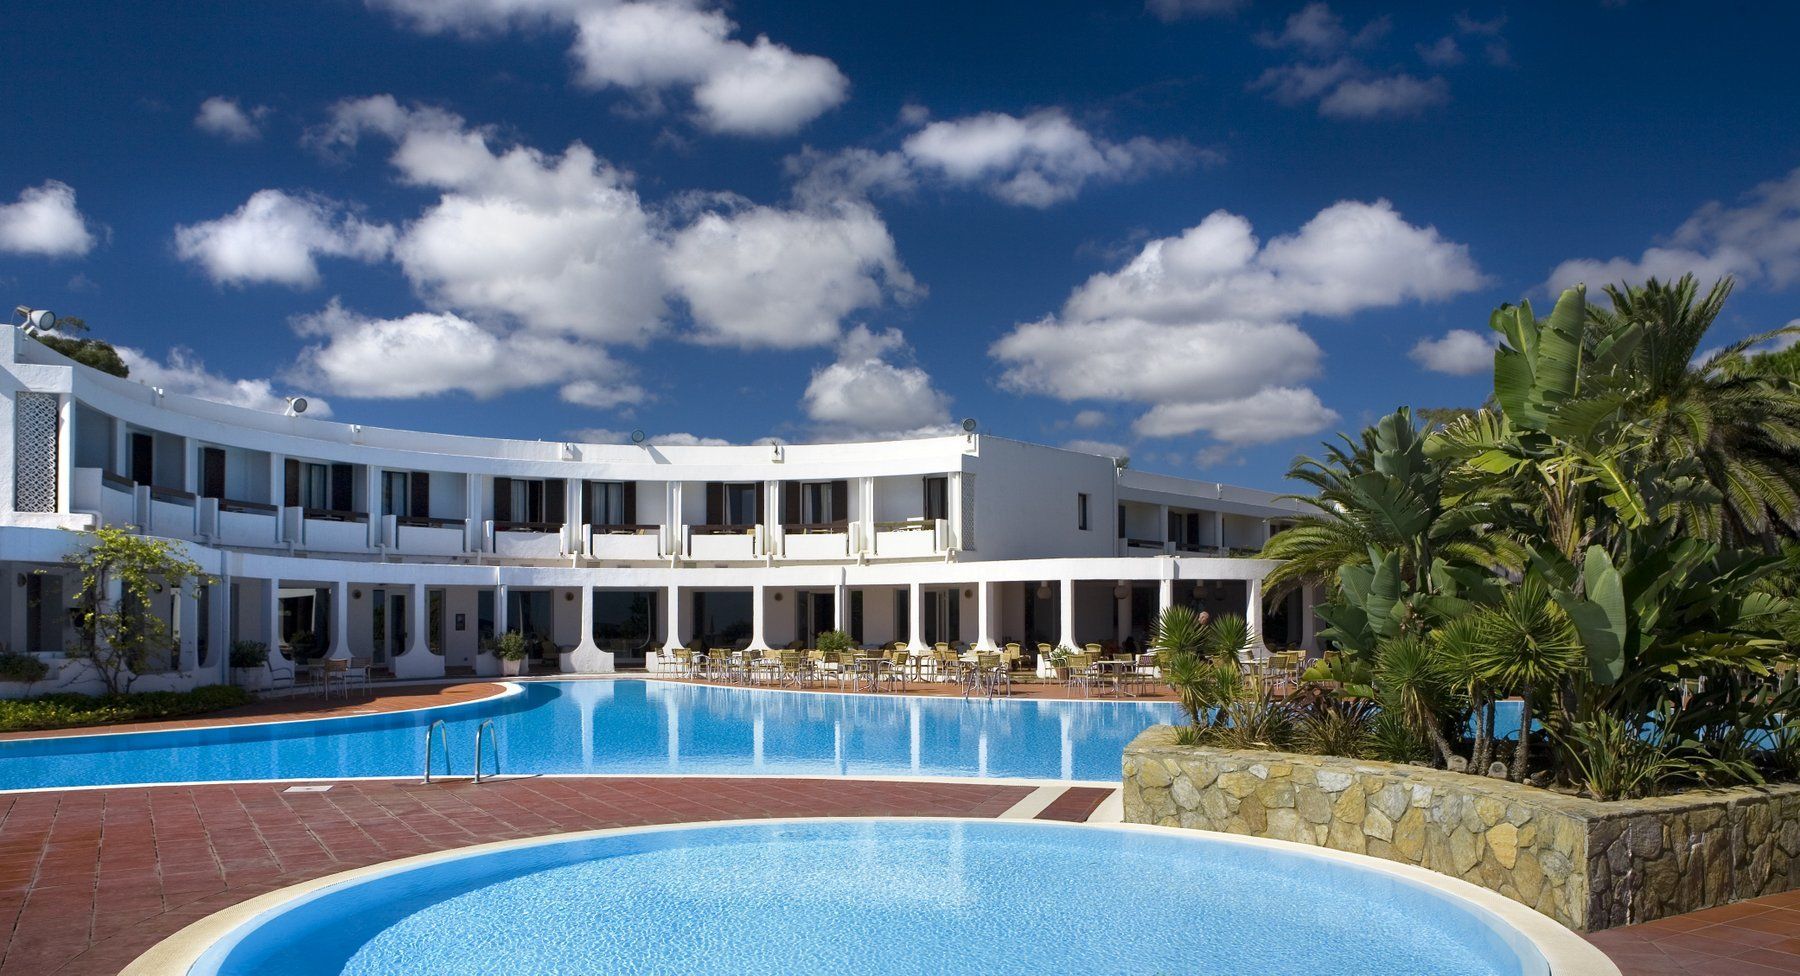 Vacances assurées – Jusqu’à 25% de rabais + Assurance annulation incluse Hotel Flamingo